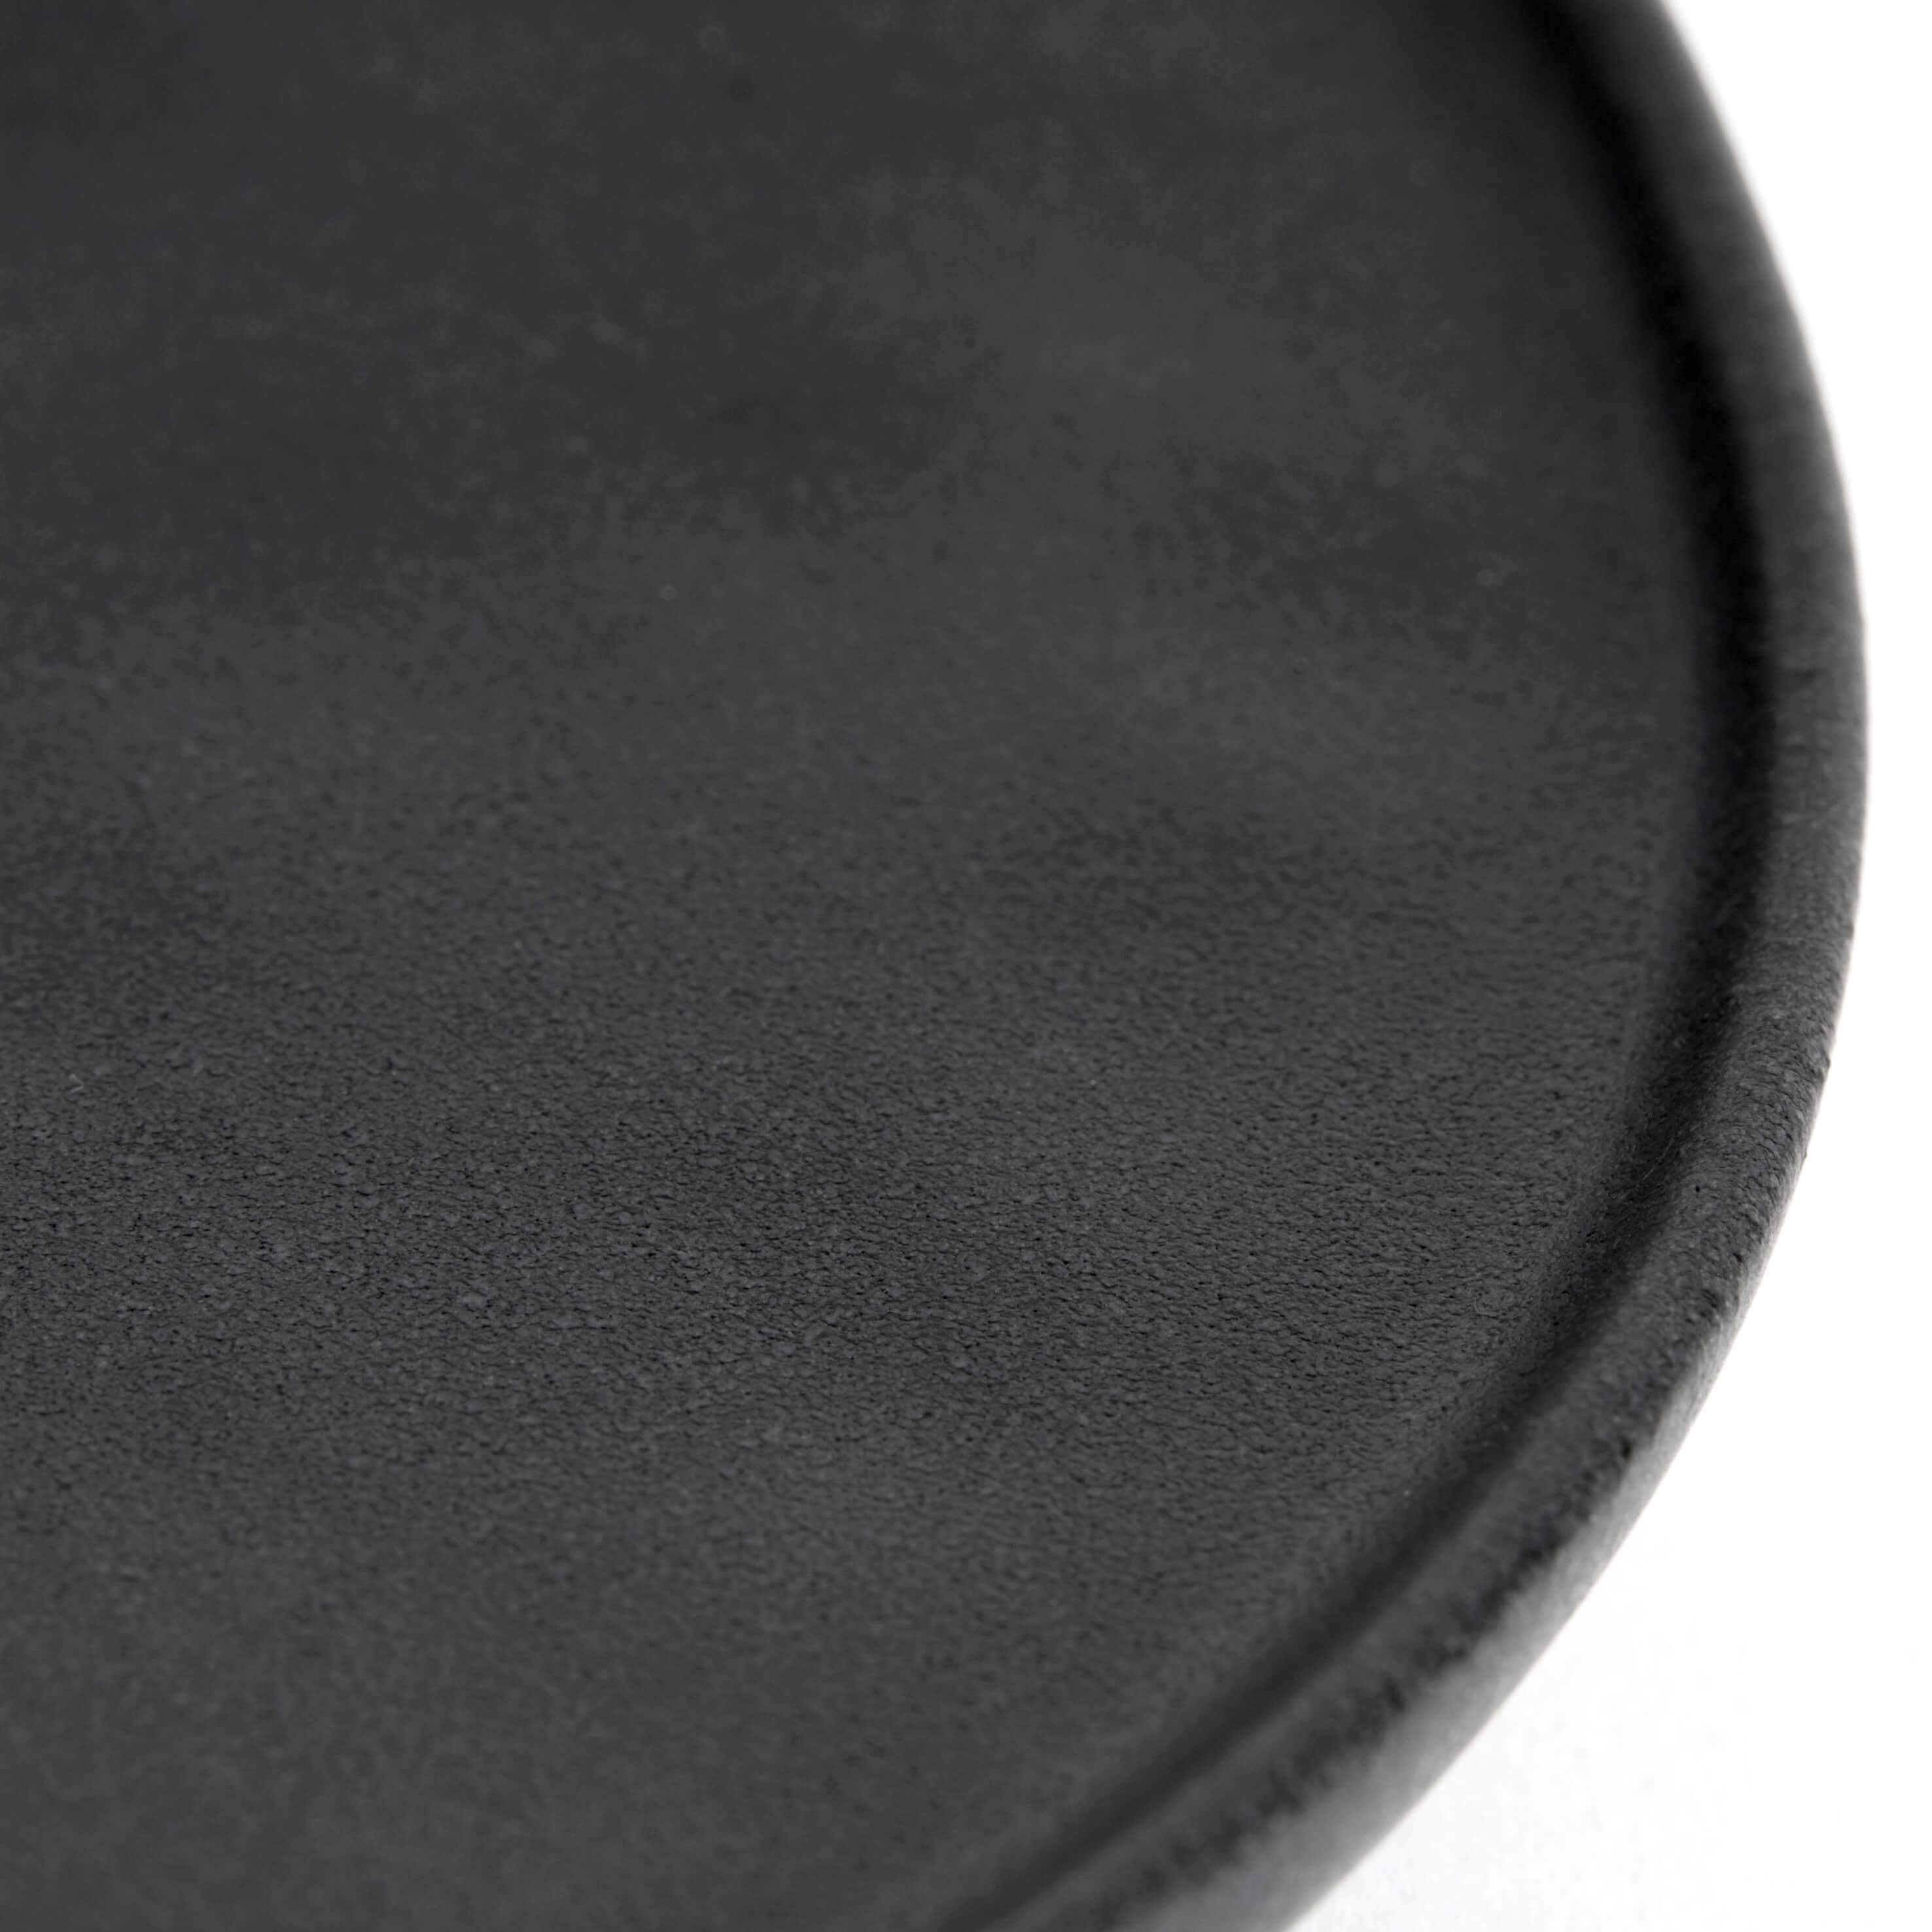 Muubs Ceto Cake Plate Black, 22 cm